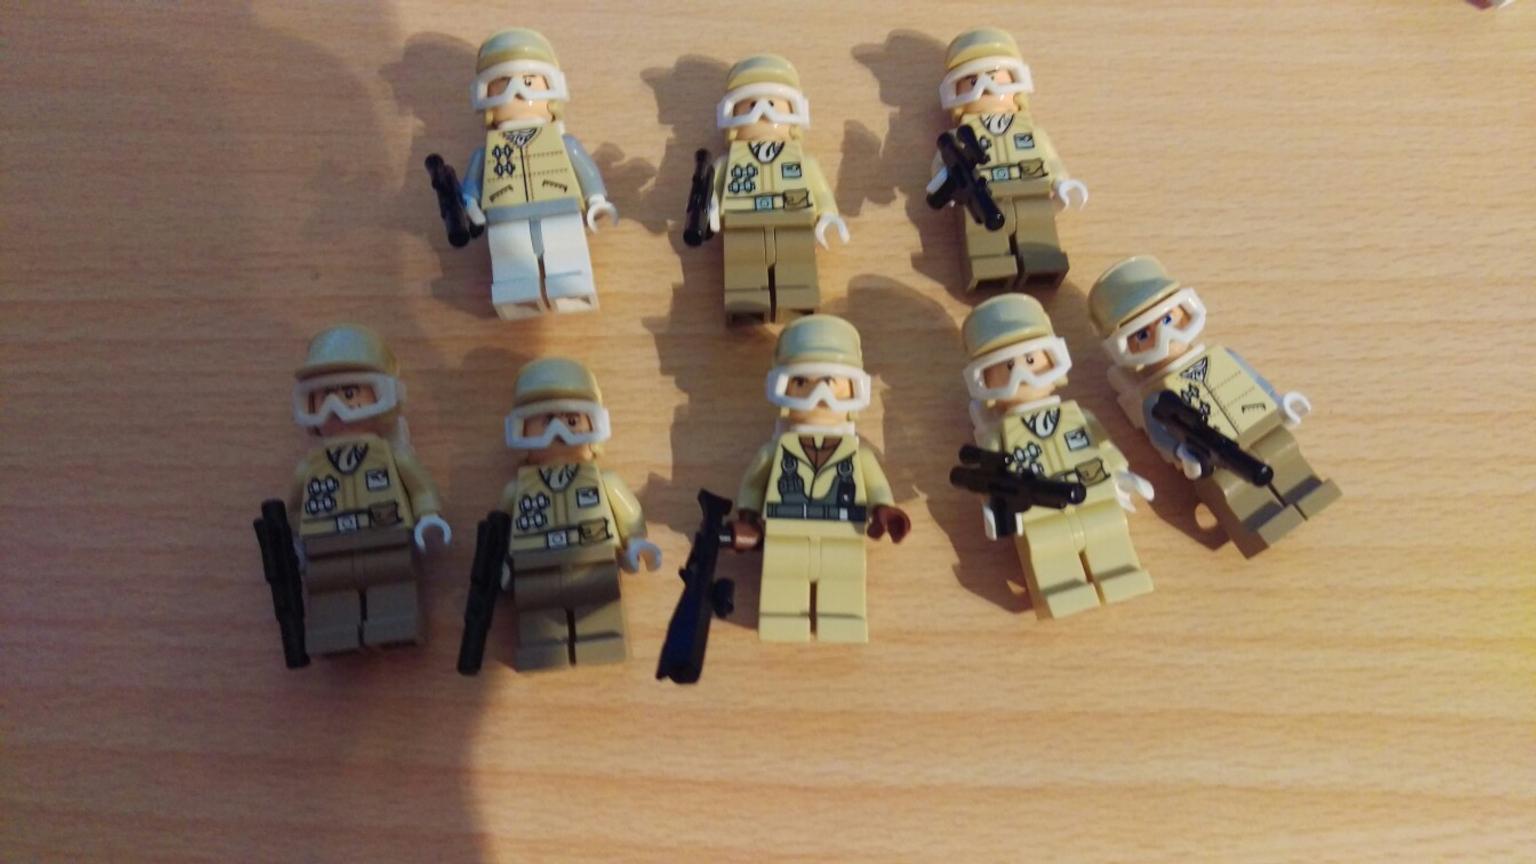 Lego Starwars Rebellen Soldaten Minifiguren In 616 Wollstadt For 10 00 For Sale Shpock